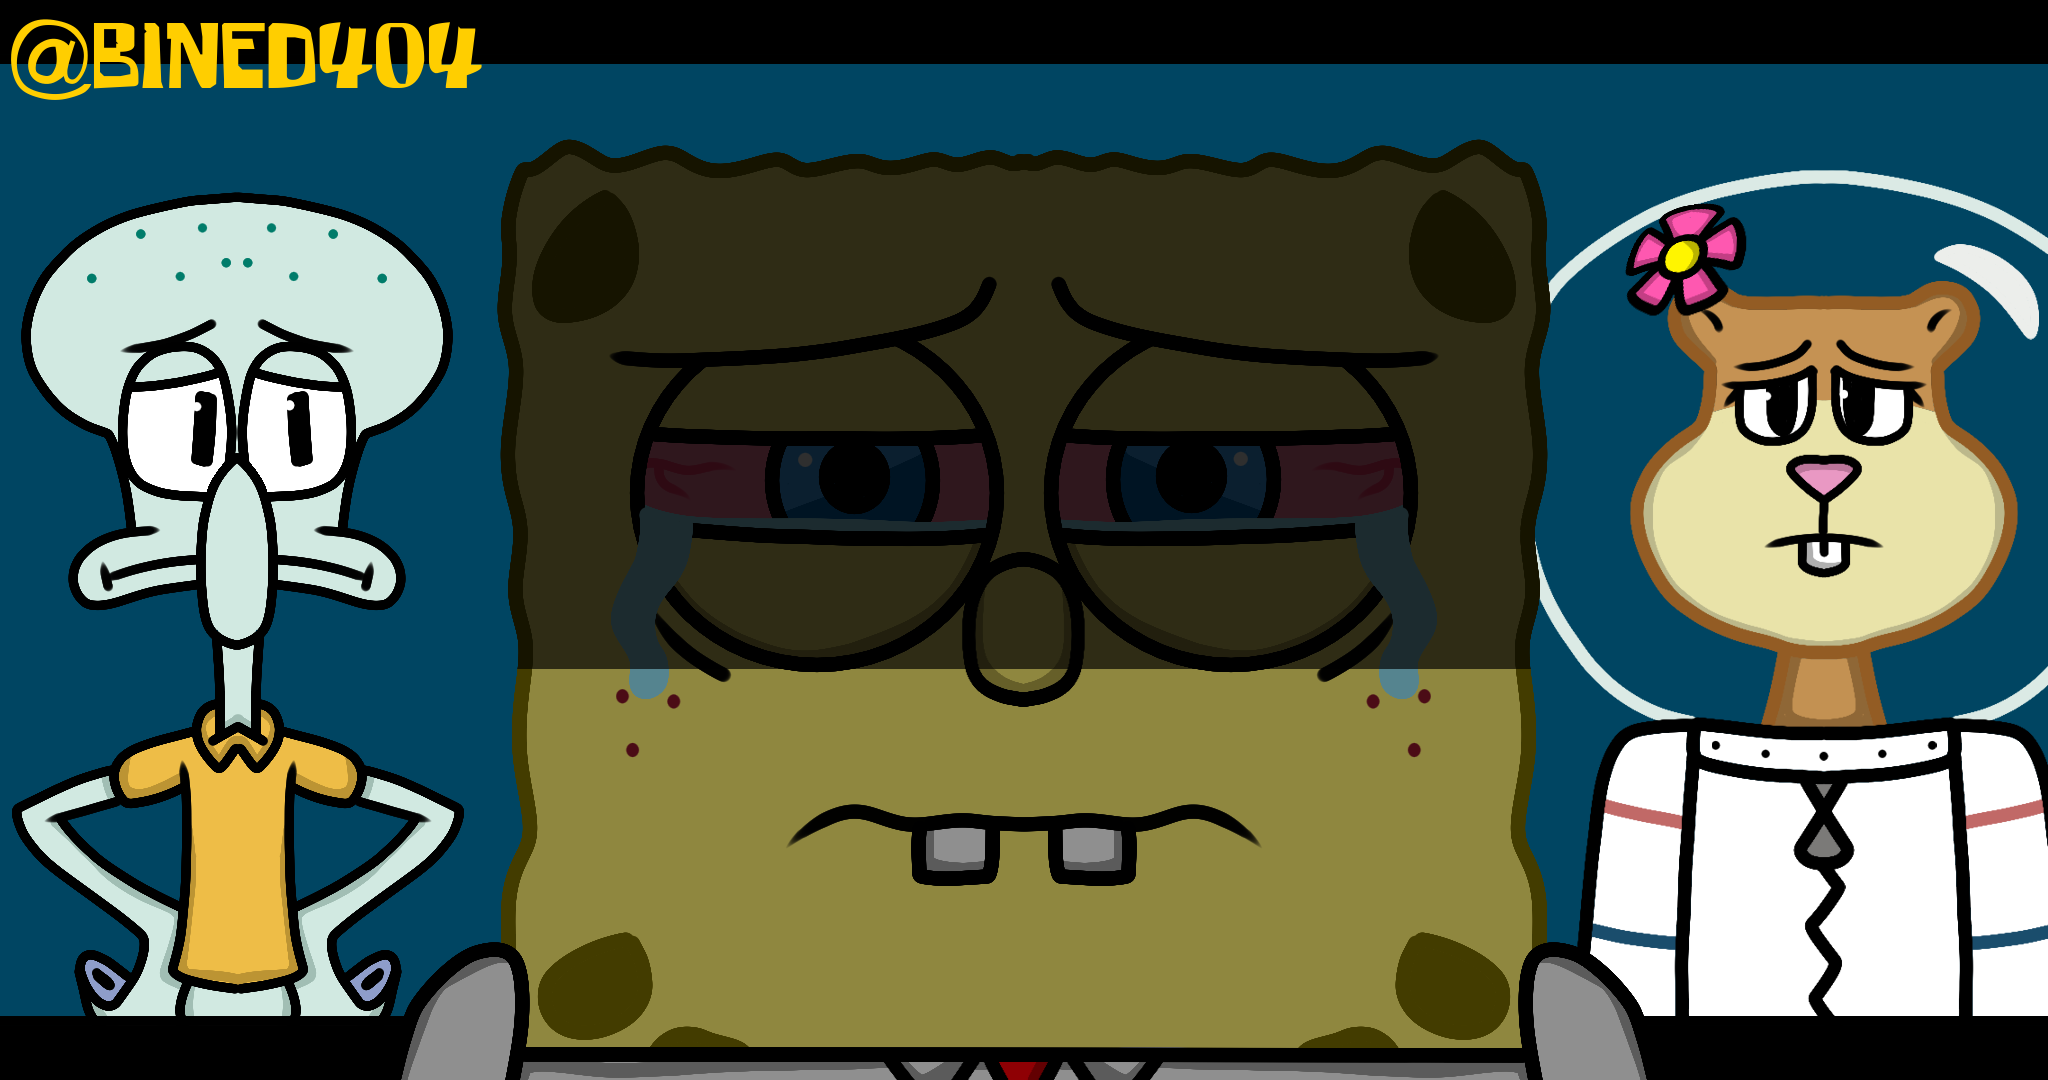 Sad Spongebob 2 by wakahama on DeviantArt